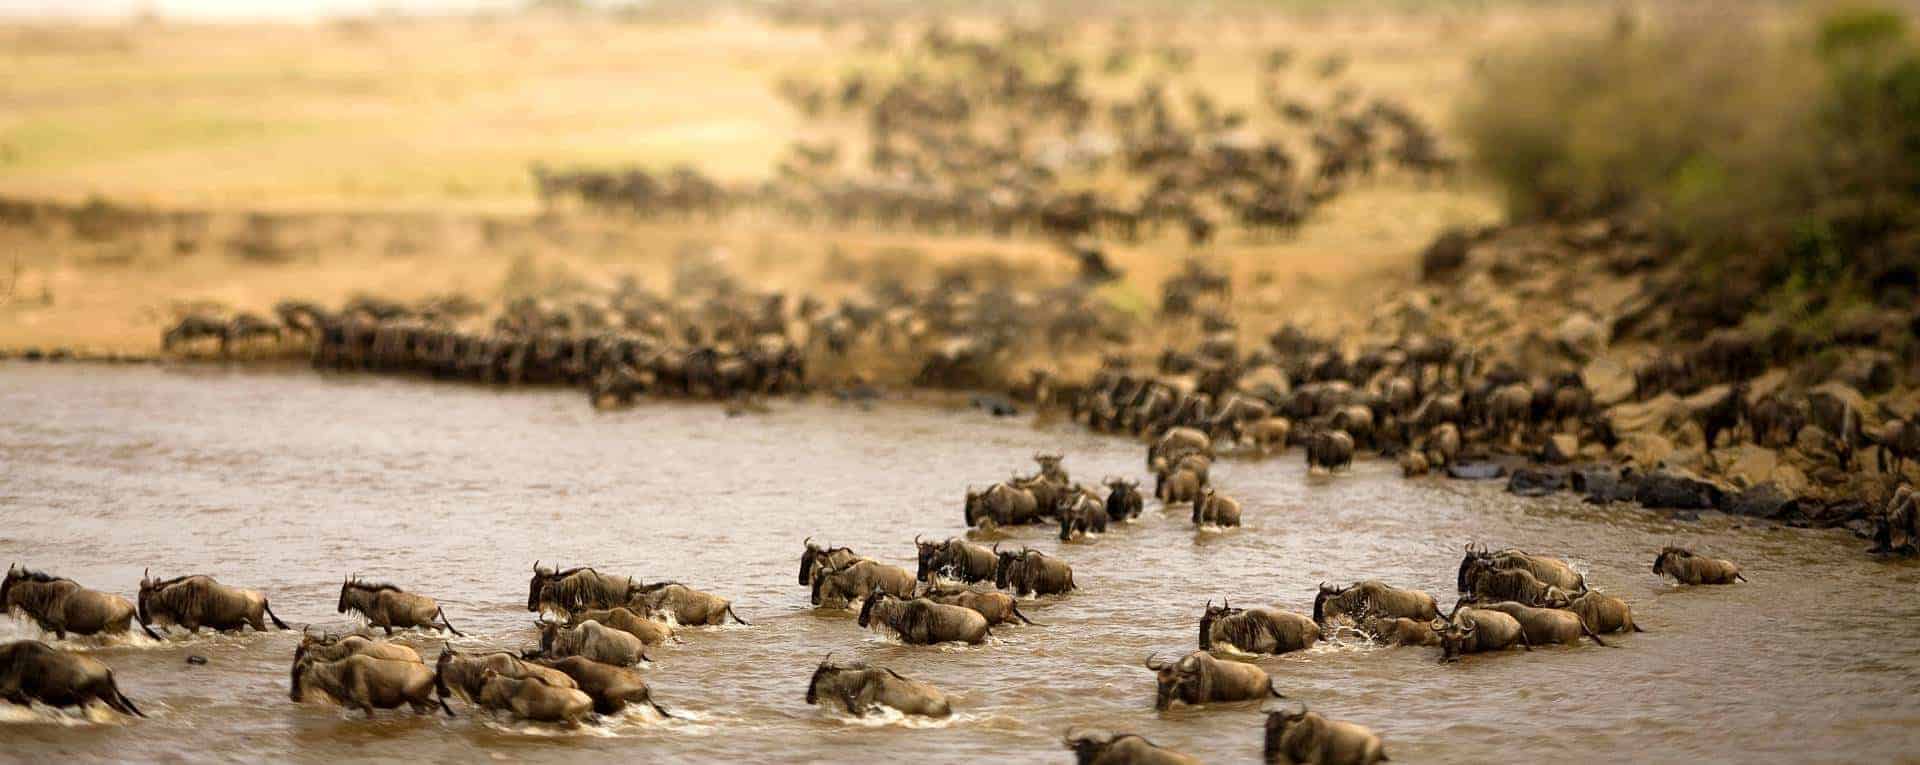 Safari Tours to Serengeti National Park